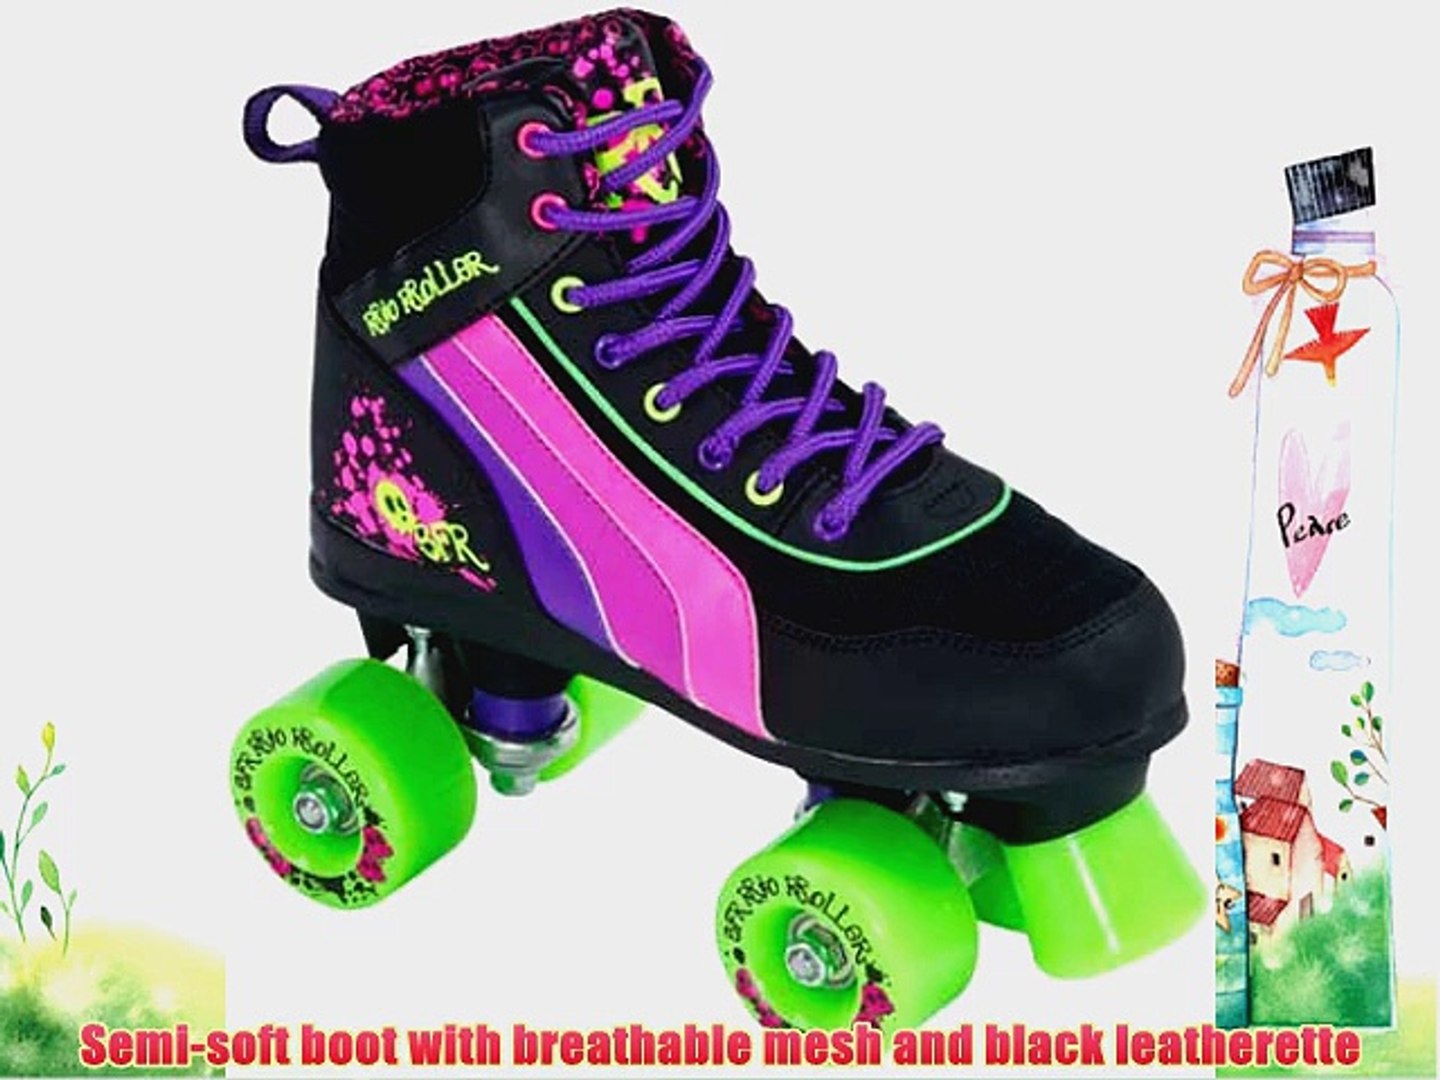 ⁣SFR Rio Roller Skull Quad Roller Skates - Black/Pink/Green - Size UK8